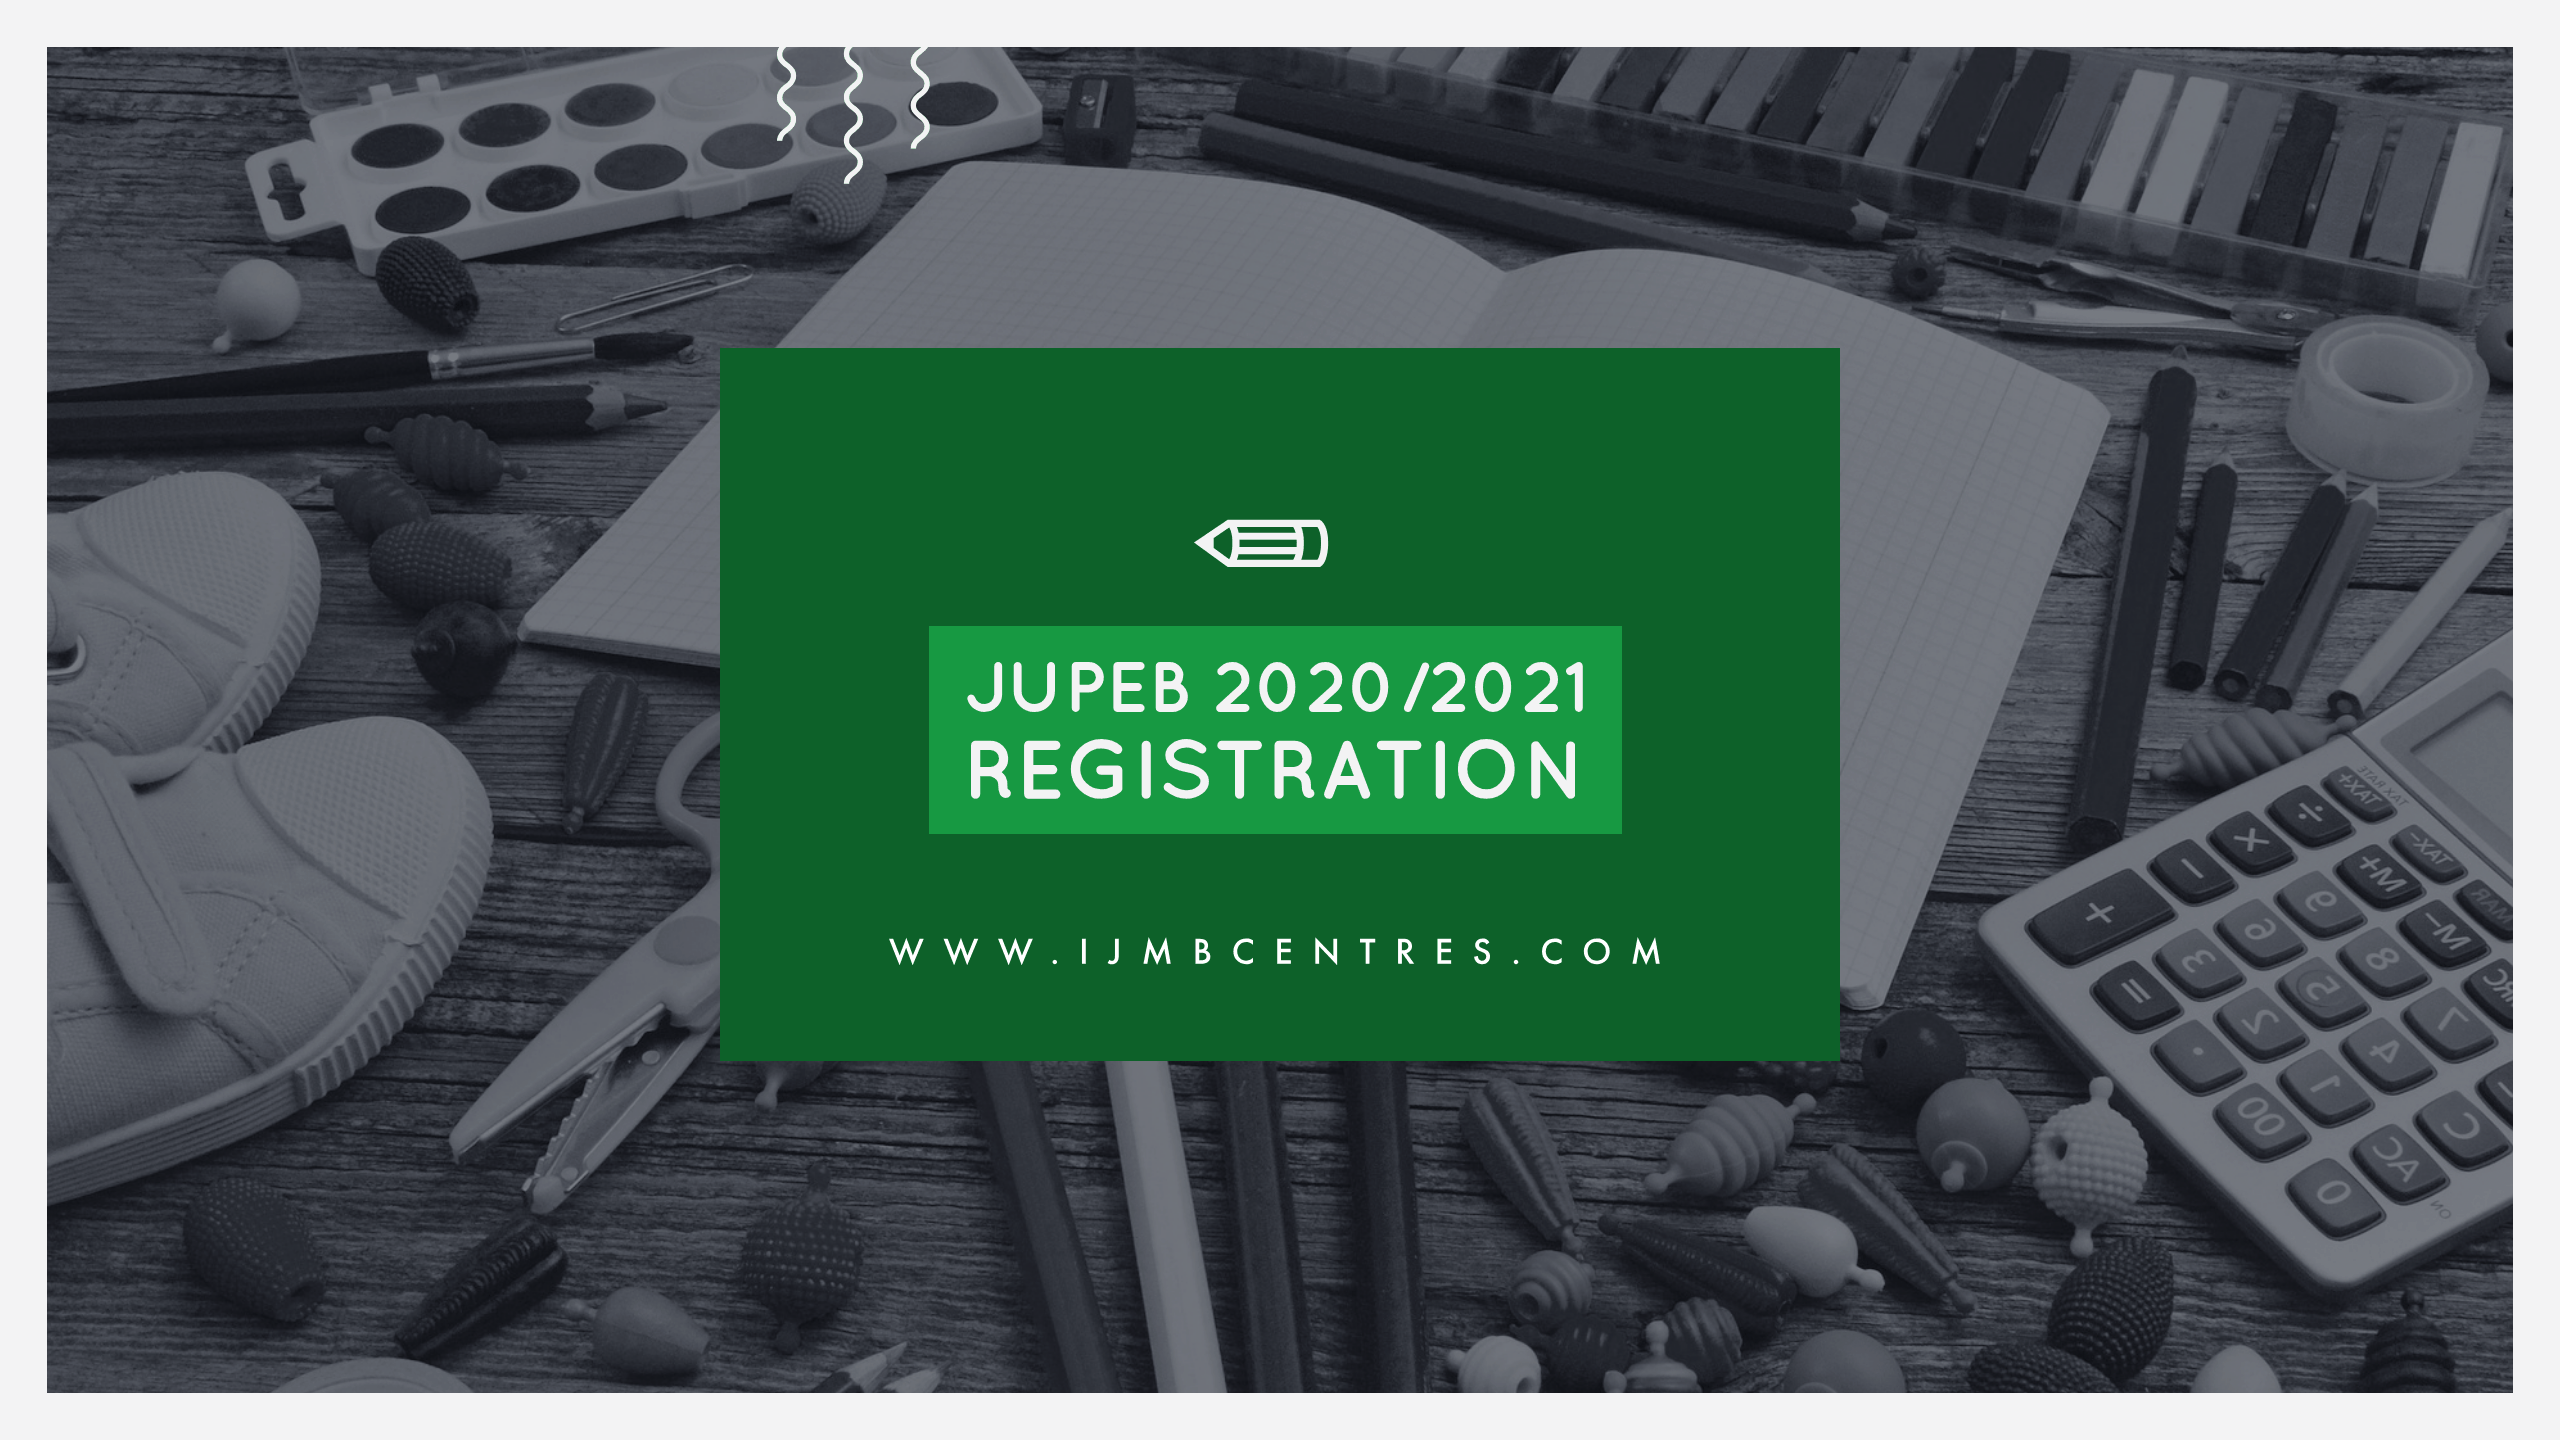 JUPEB 2020/2021 Registration